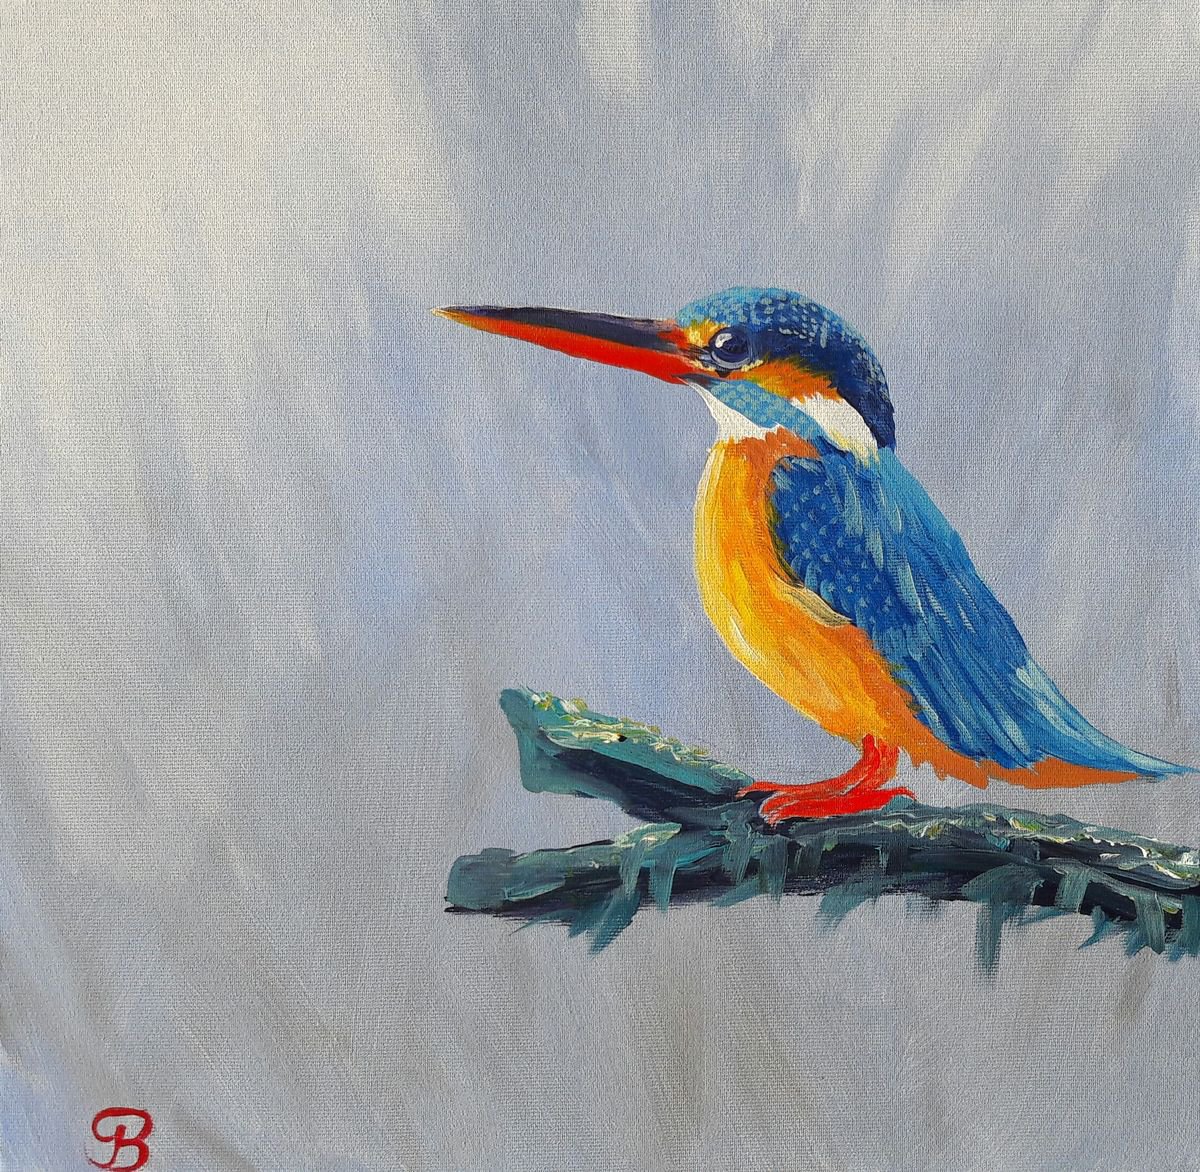 Kingfisher by George Budai